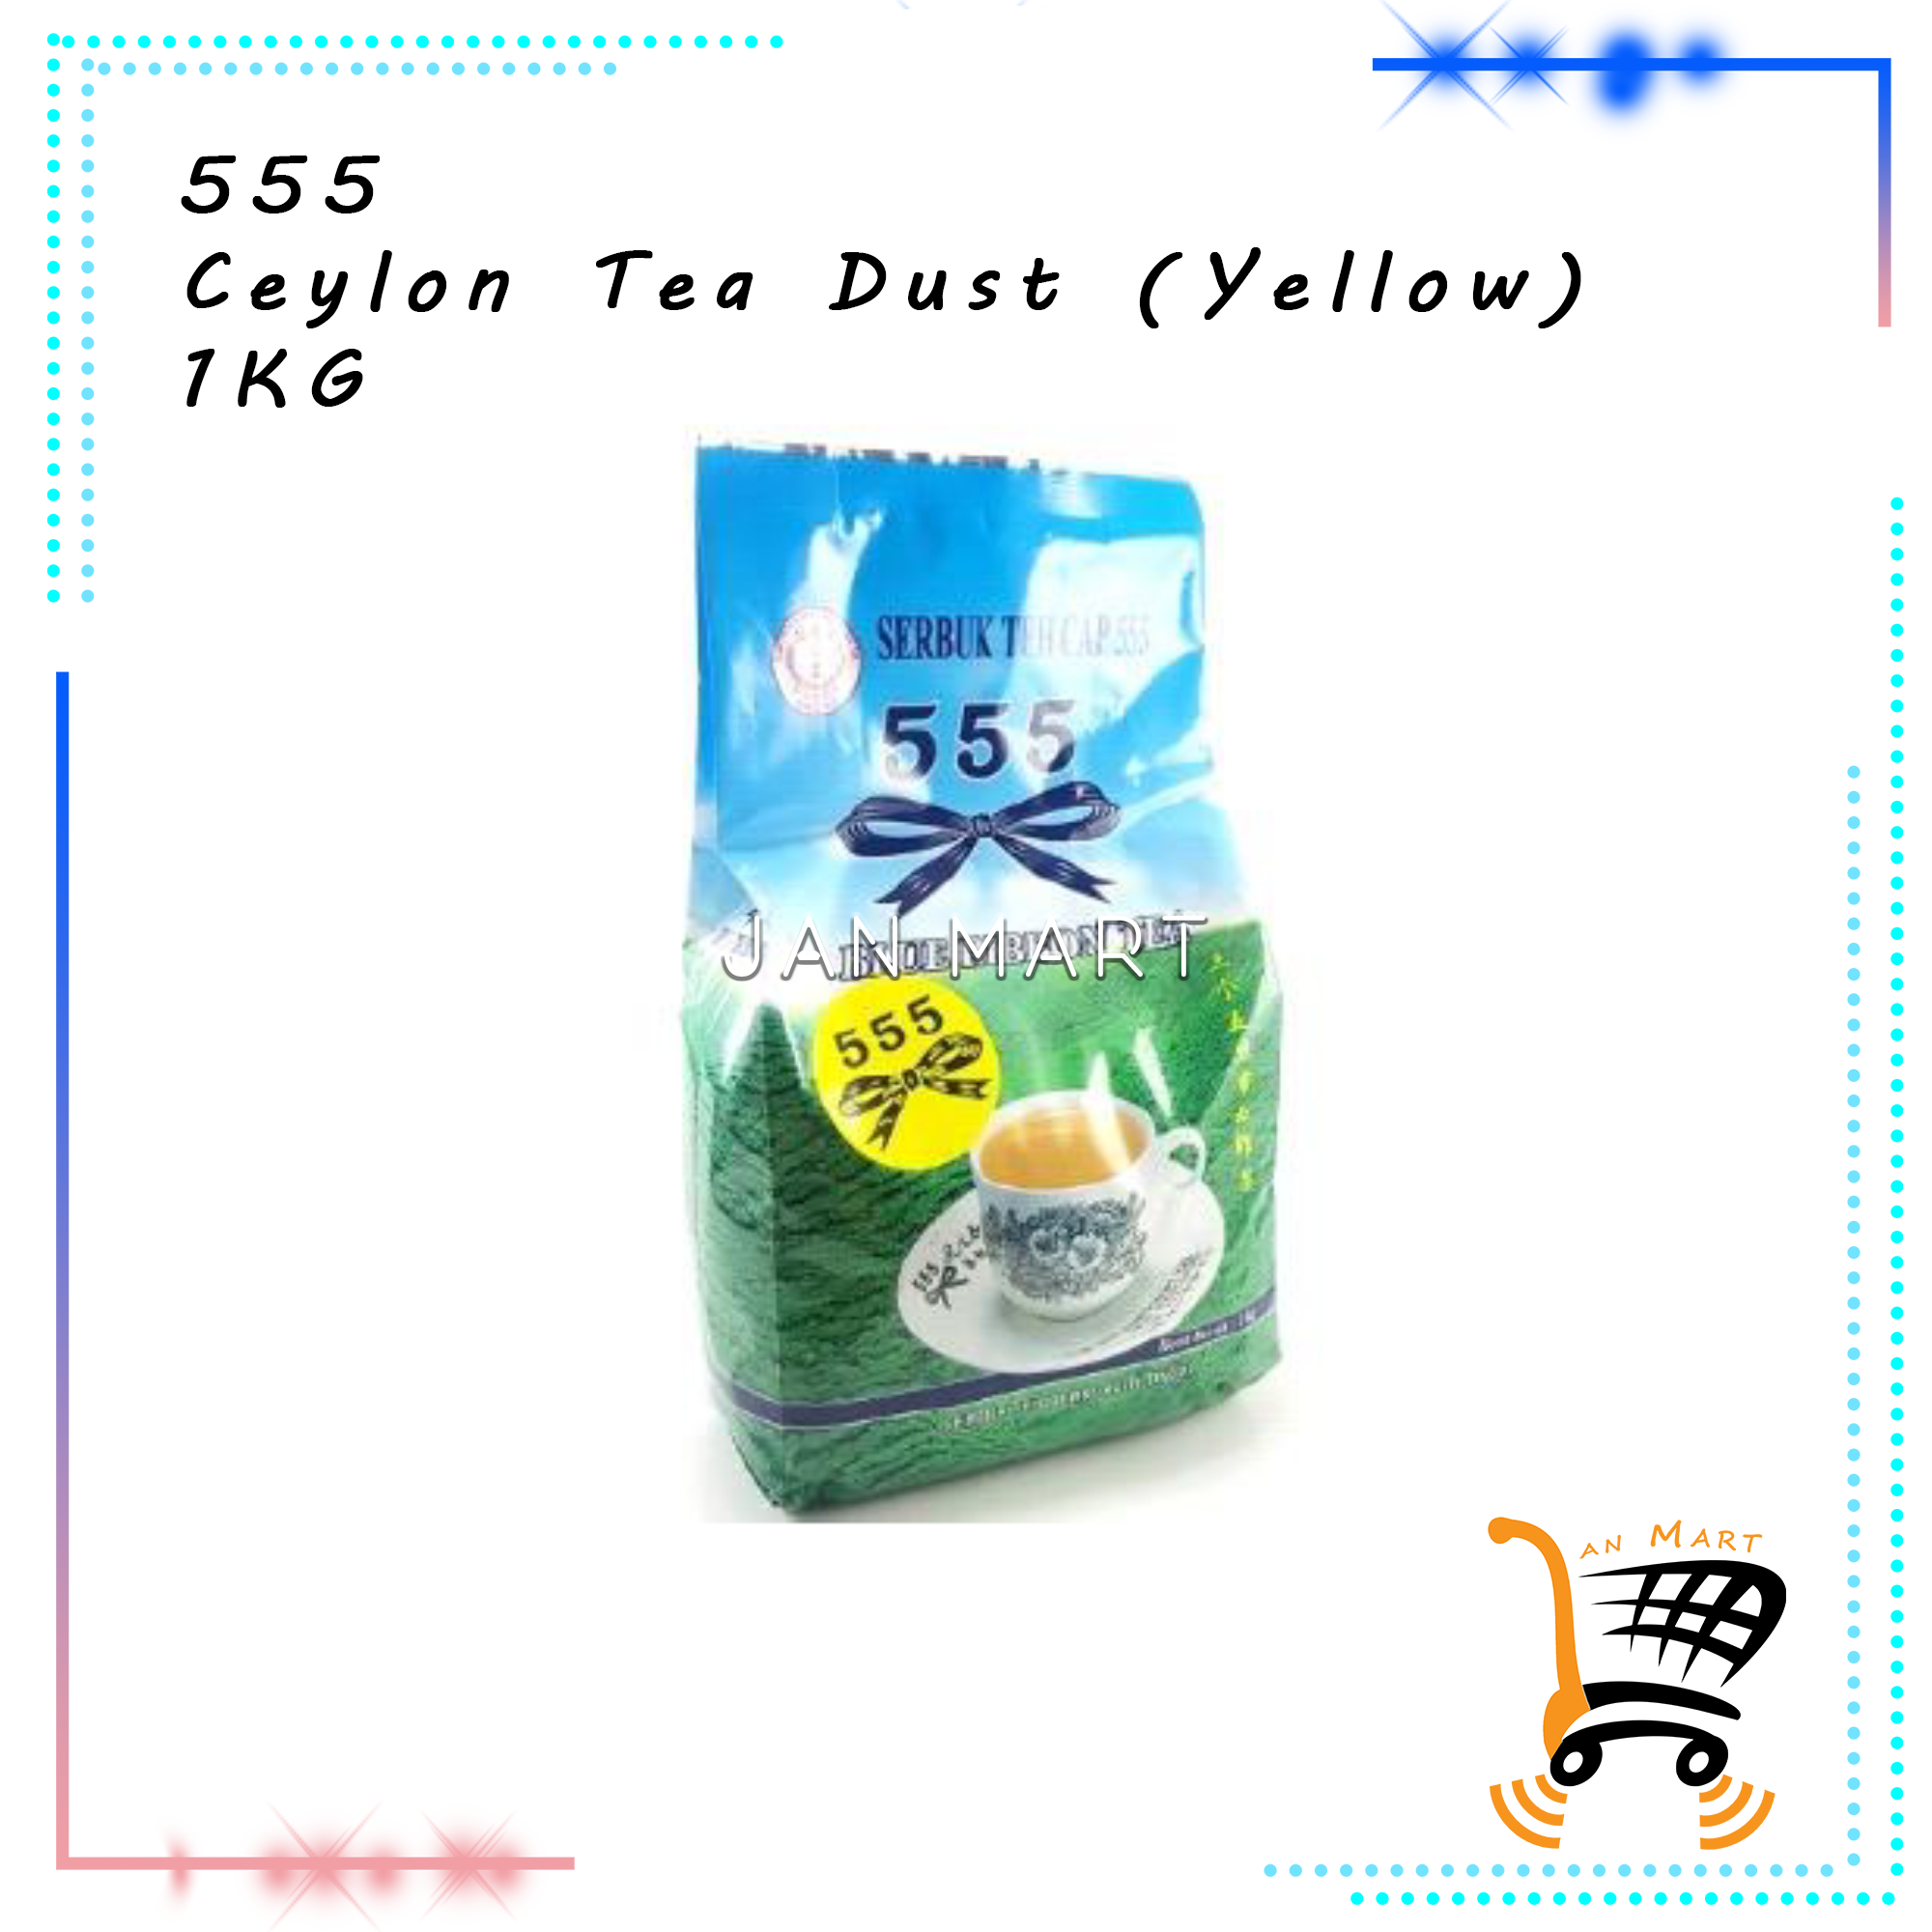 555 Ceylon Tea Dust Yellow Label 1KG